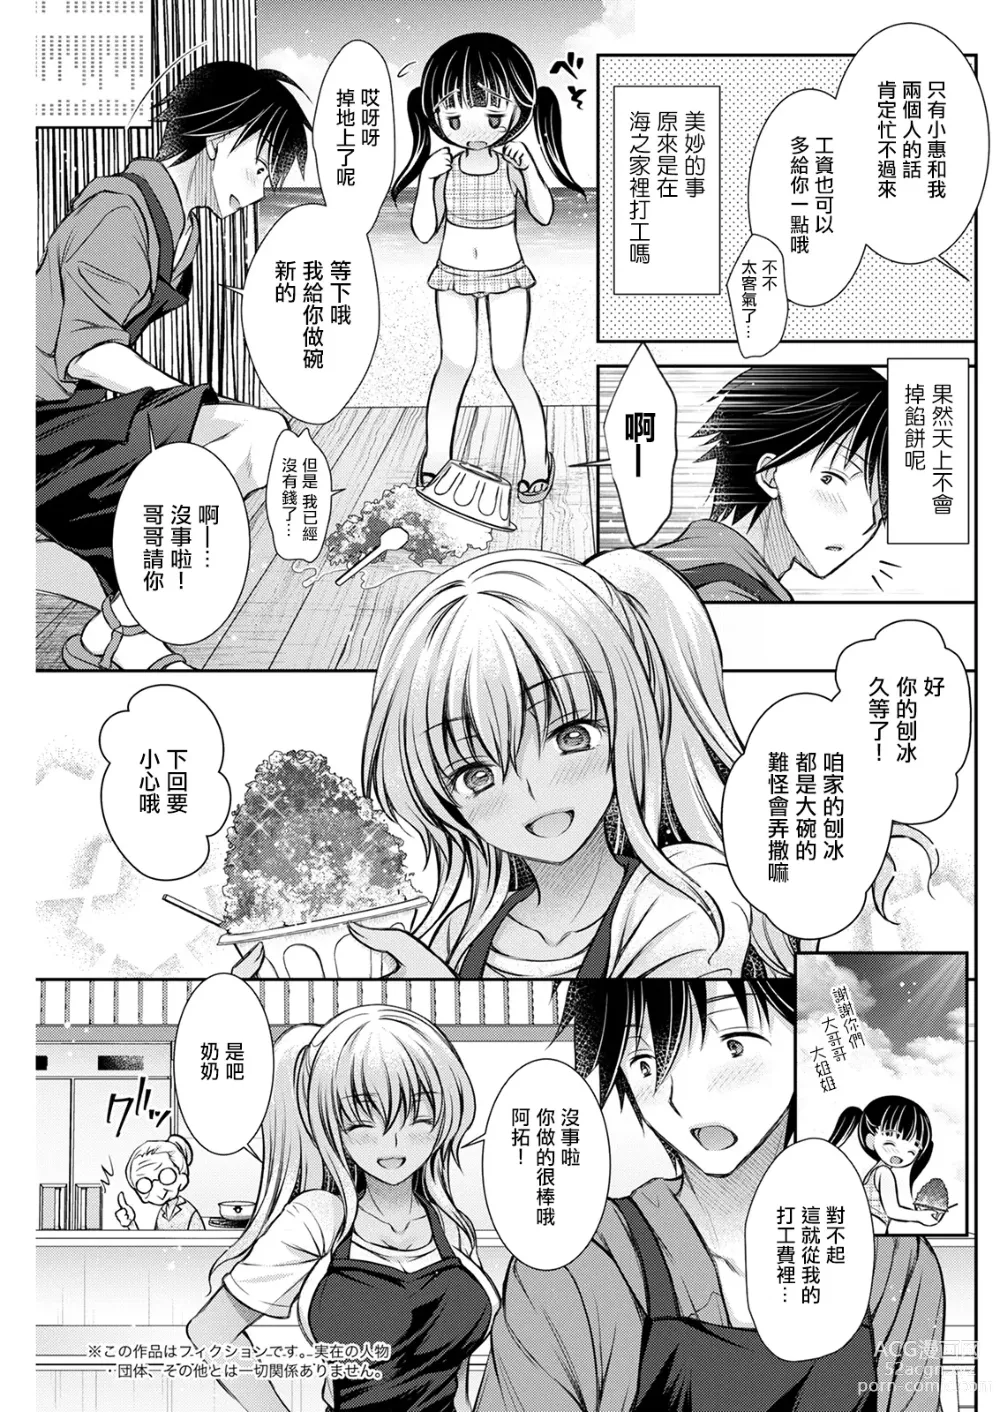 Page 3 of manga Umi no Yeah!!